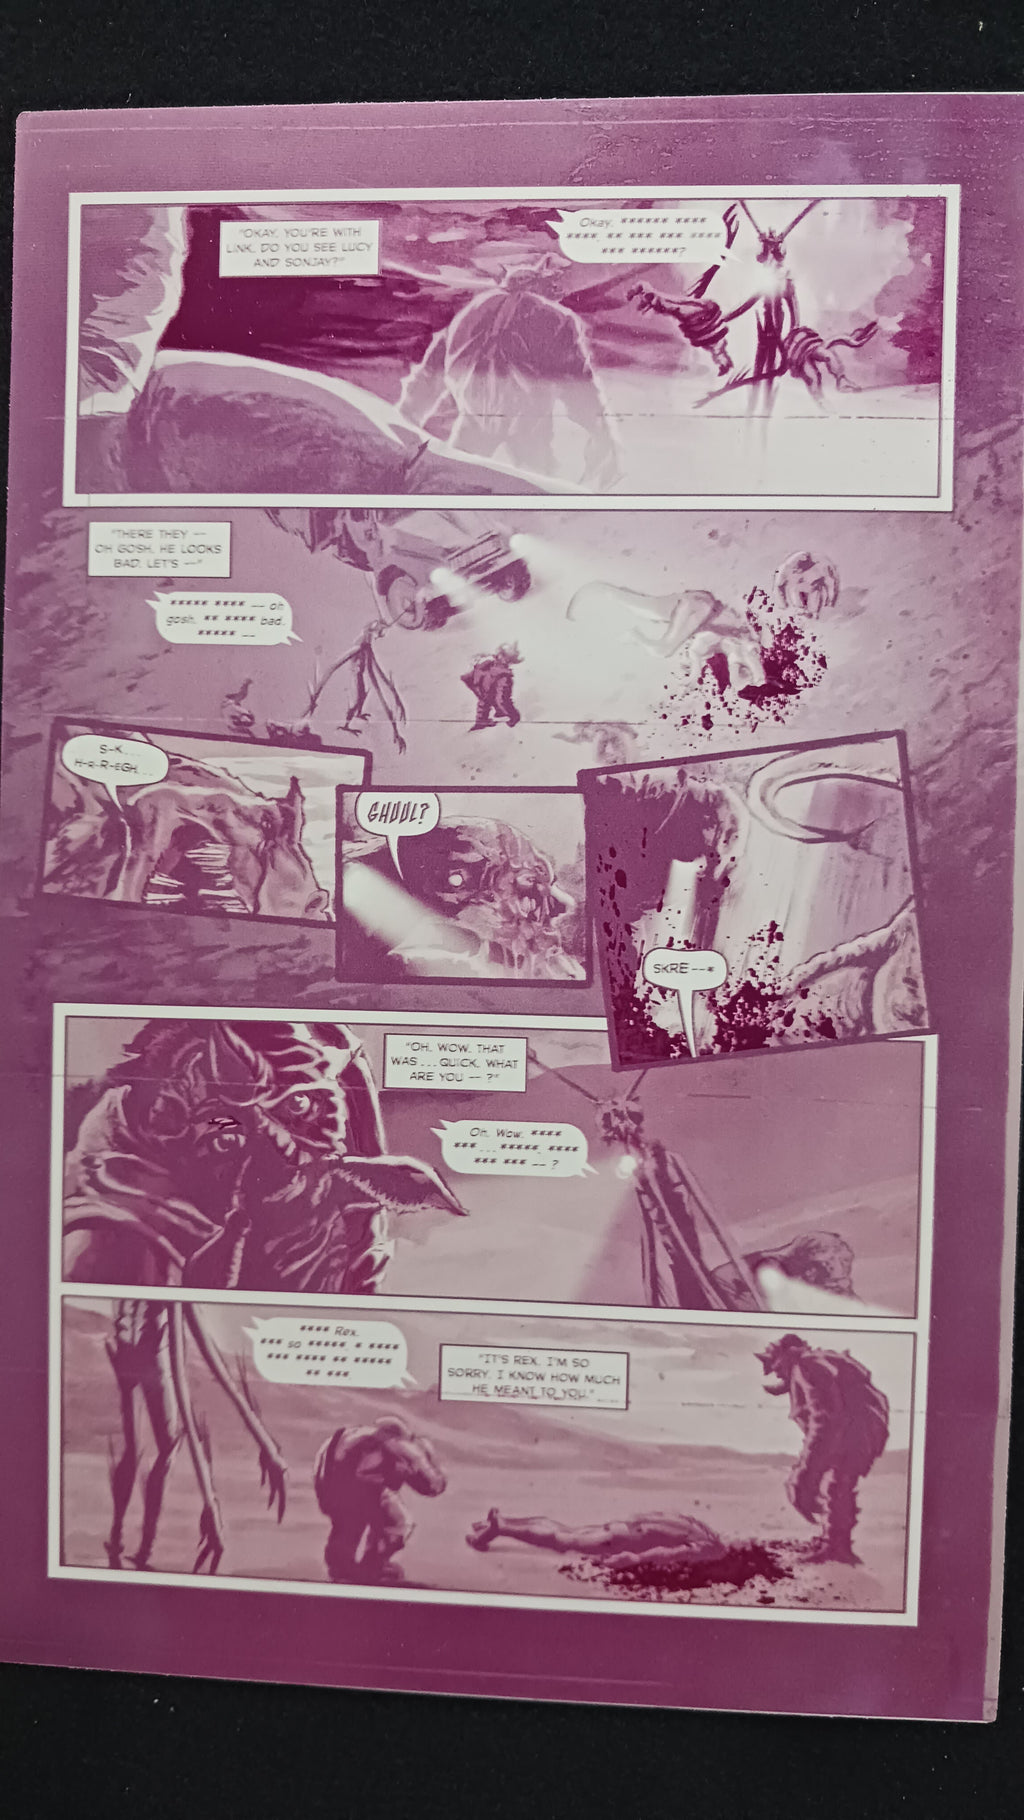 Behemoth #4 - Page 9  - PRESSWORKS - Comic Art - Printer Plate - Magenta